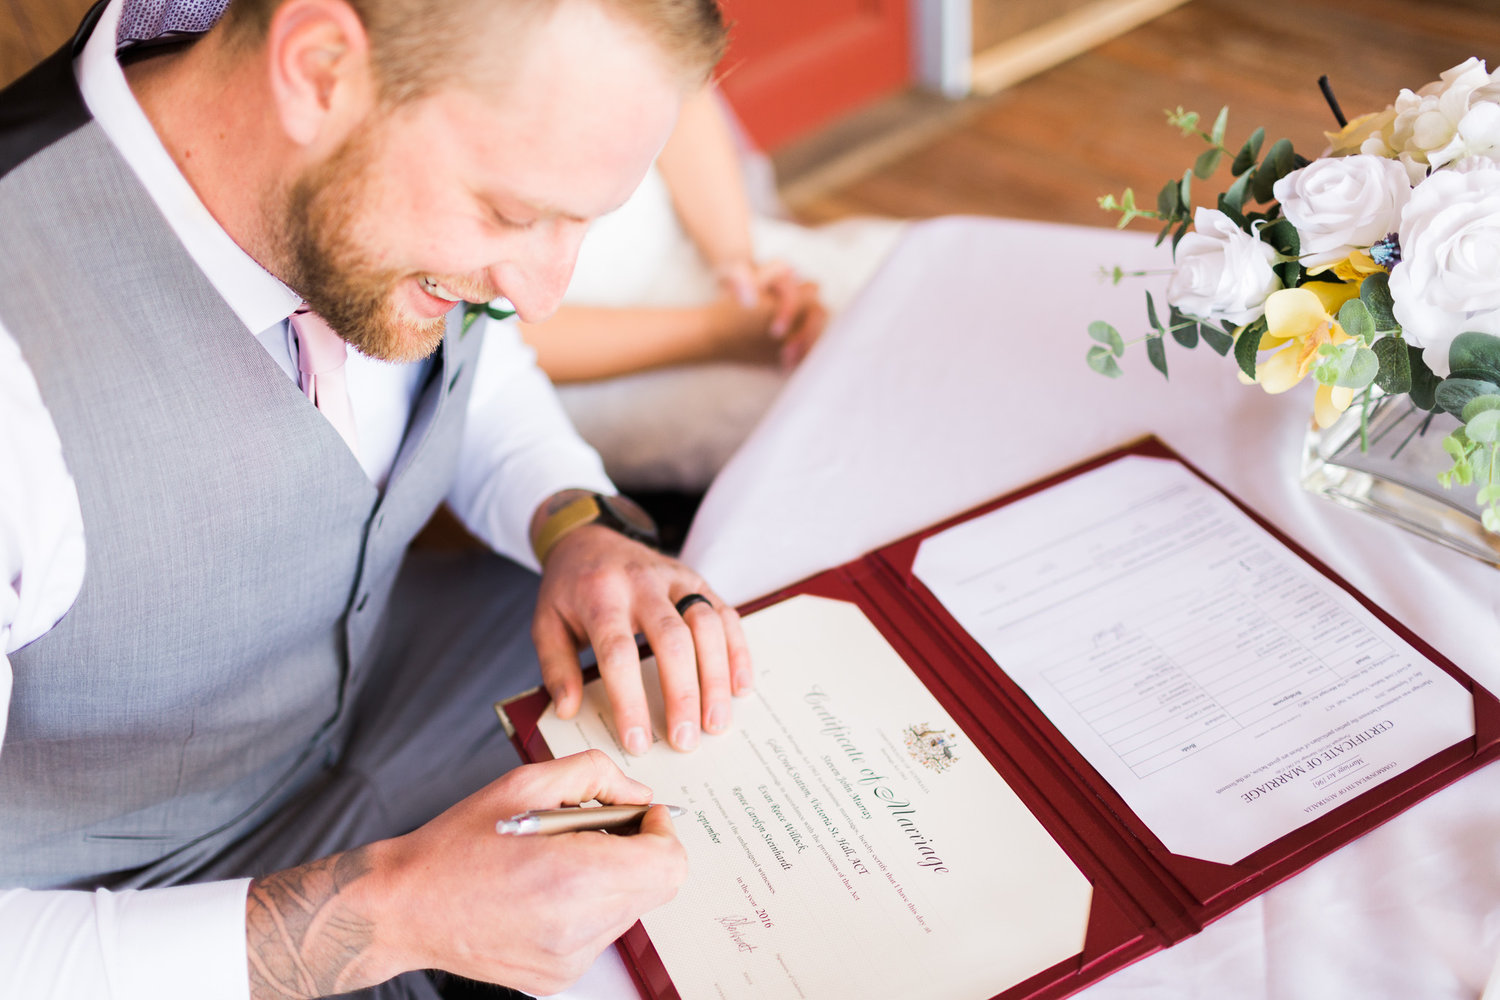 Signing+the+certificate+-+Gold+Creek+Station+Wedding.jpeg